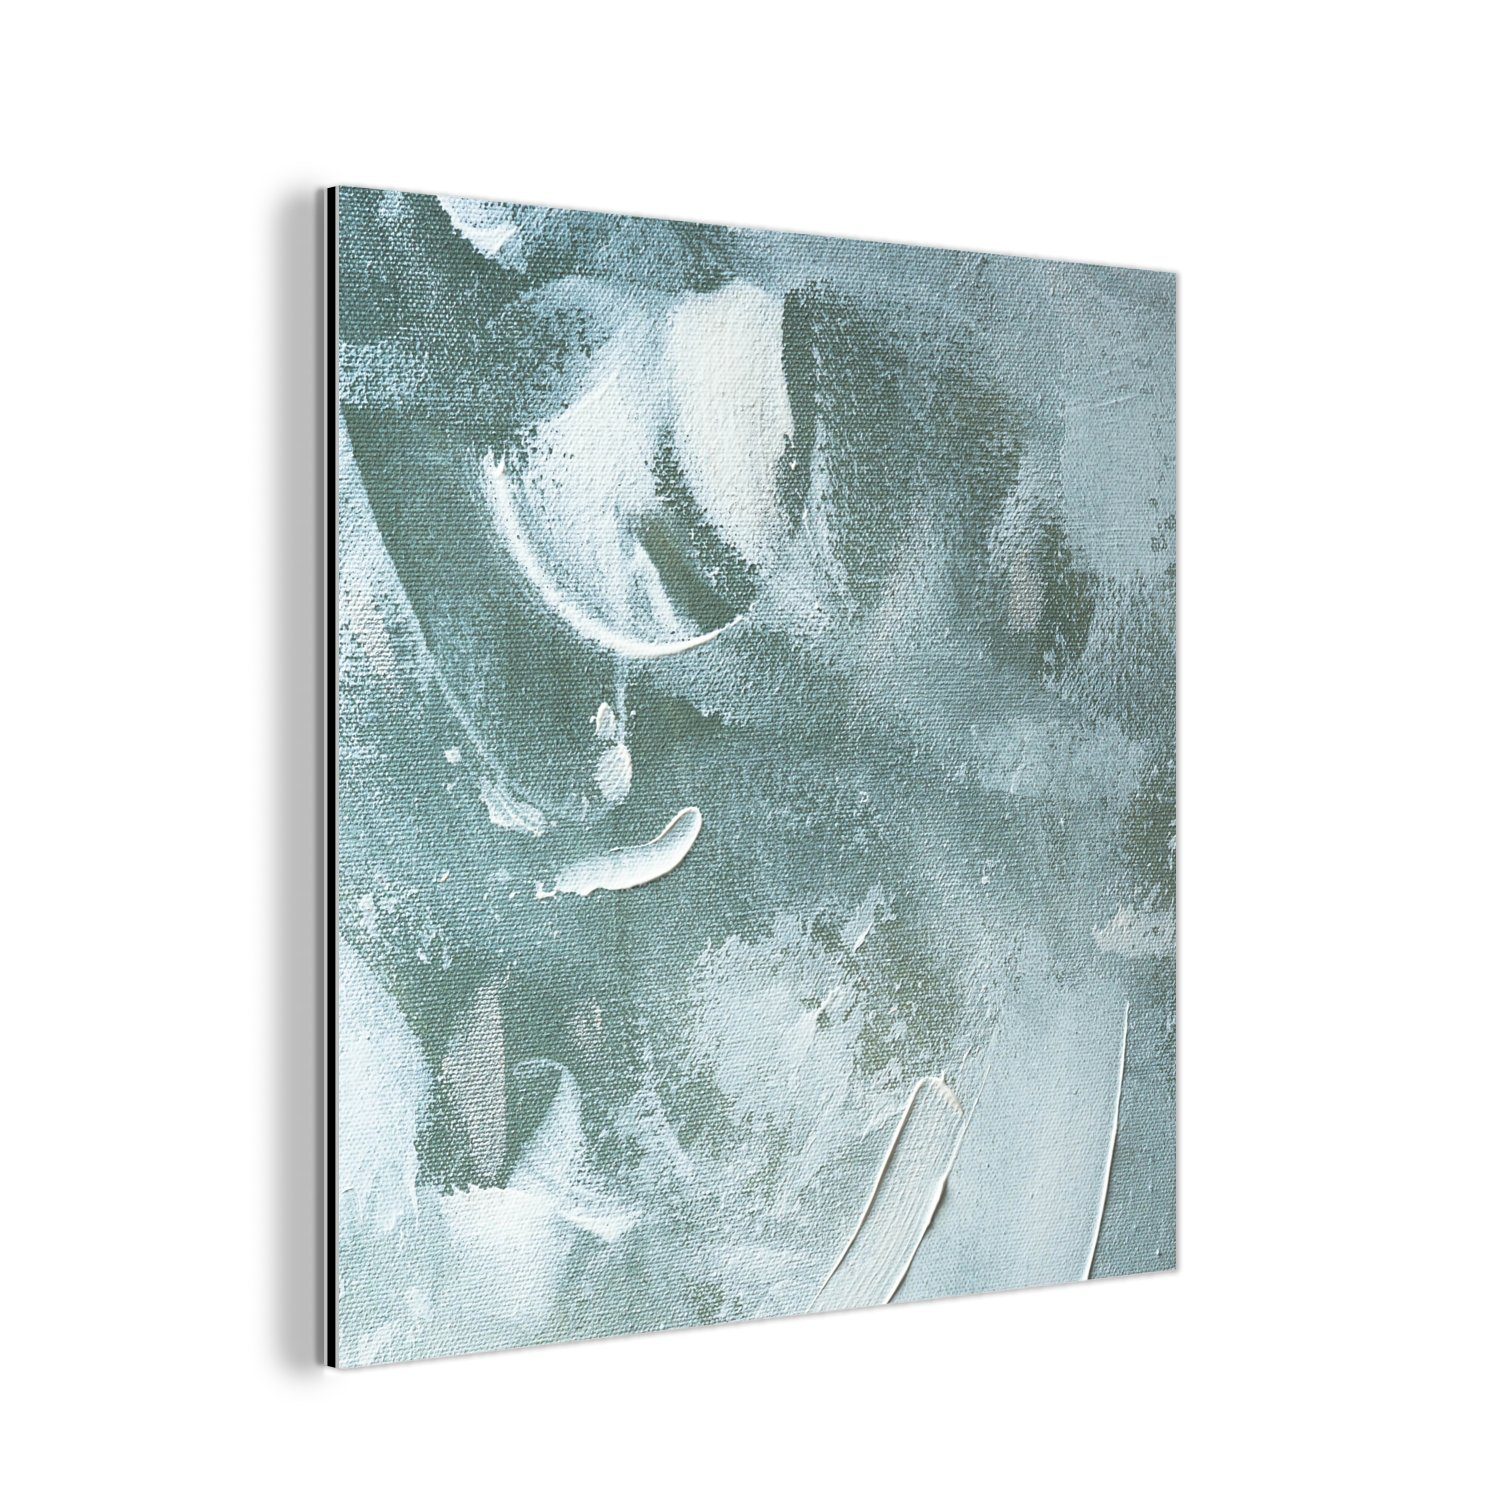 MuchoWow Metallbild Acrylfarbe - Abstrakt - Design, (1 St), Alu-Dibond-Druck, Gemälde aus Metall, Aluminium deko